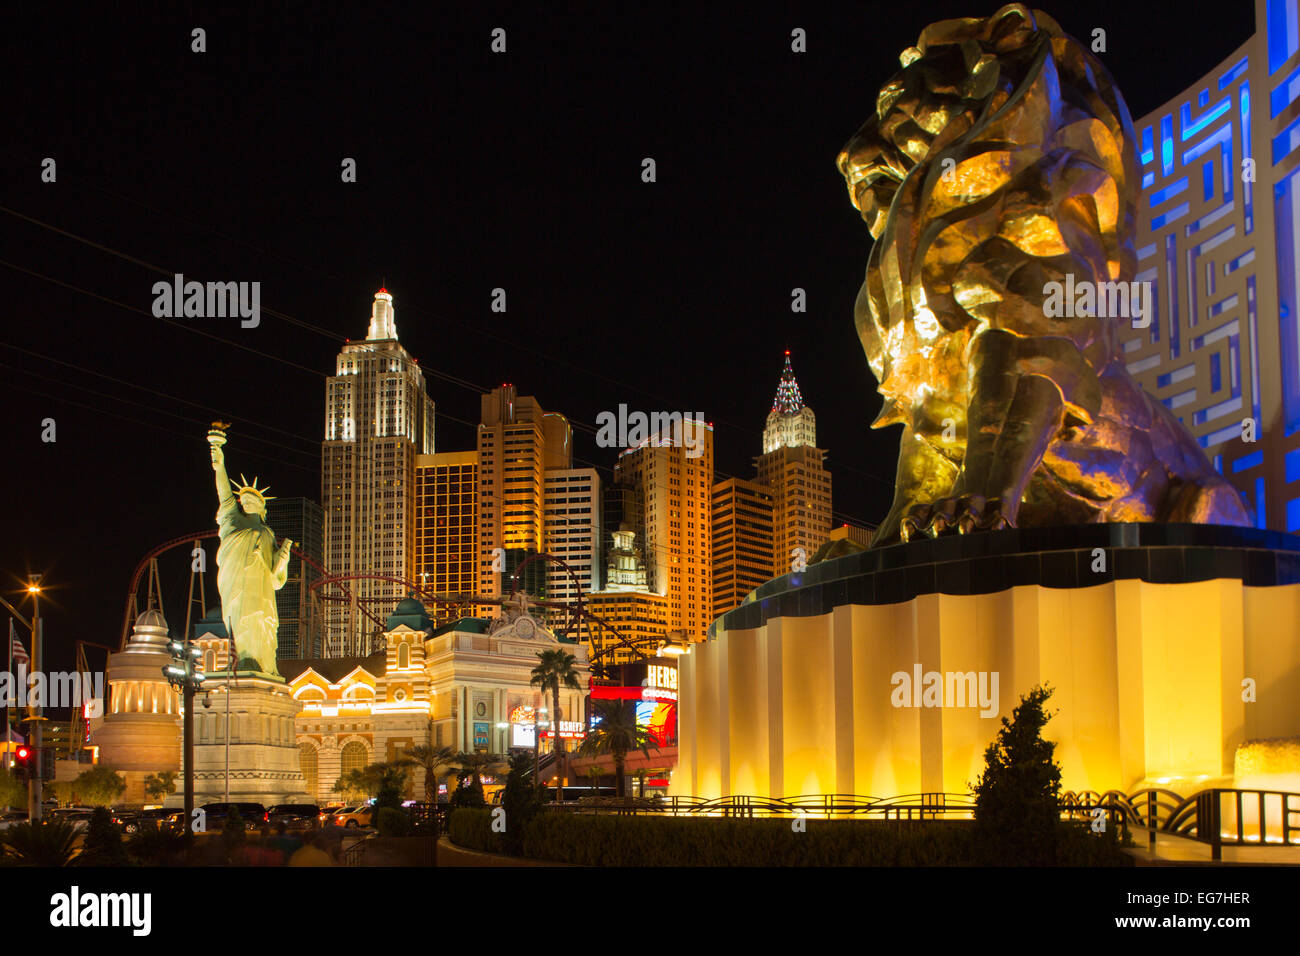 LION MGM GRAND NEW YORK NEW YORK HOTEL CASINOS THE STRIP LAS VEGAS NEVADA USA Stock Photo